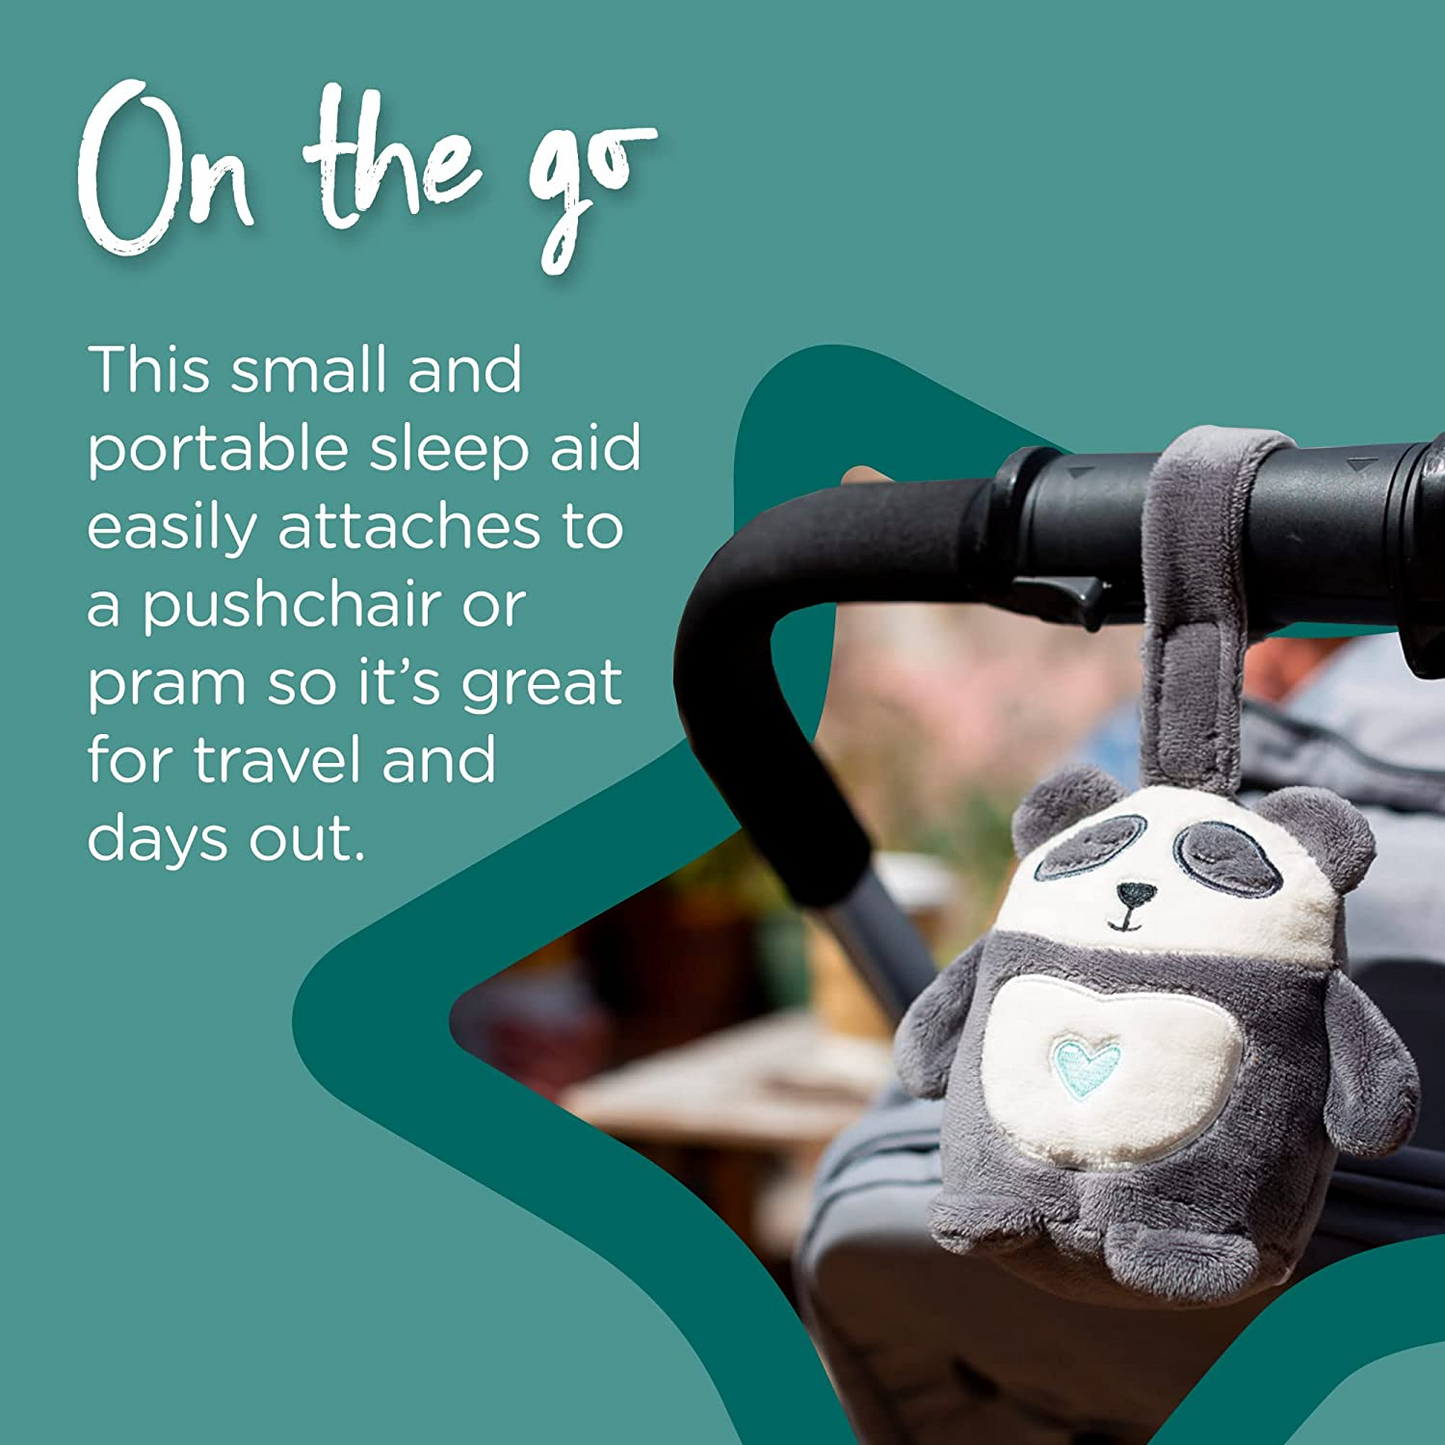 Tommee Tippee Mini Grofriend Baby Sound Sleep Aid, recarregável por USB, sons suaves, canções de ninar e ruído branco com CrySensor, lavável na máquina, Pip the Panda